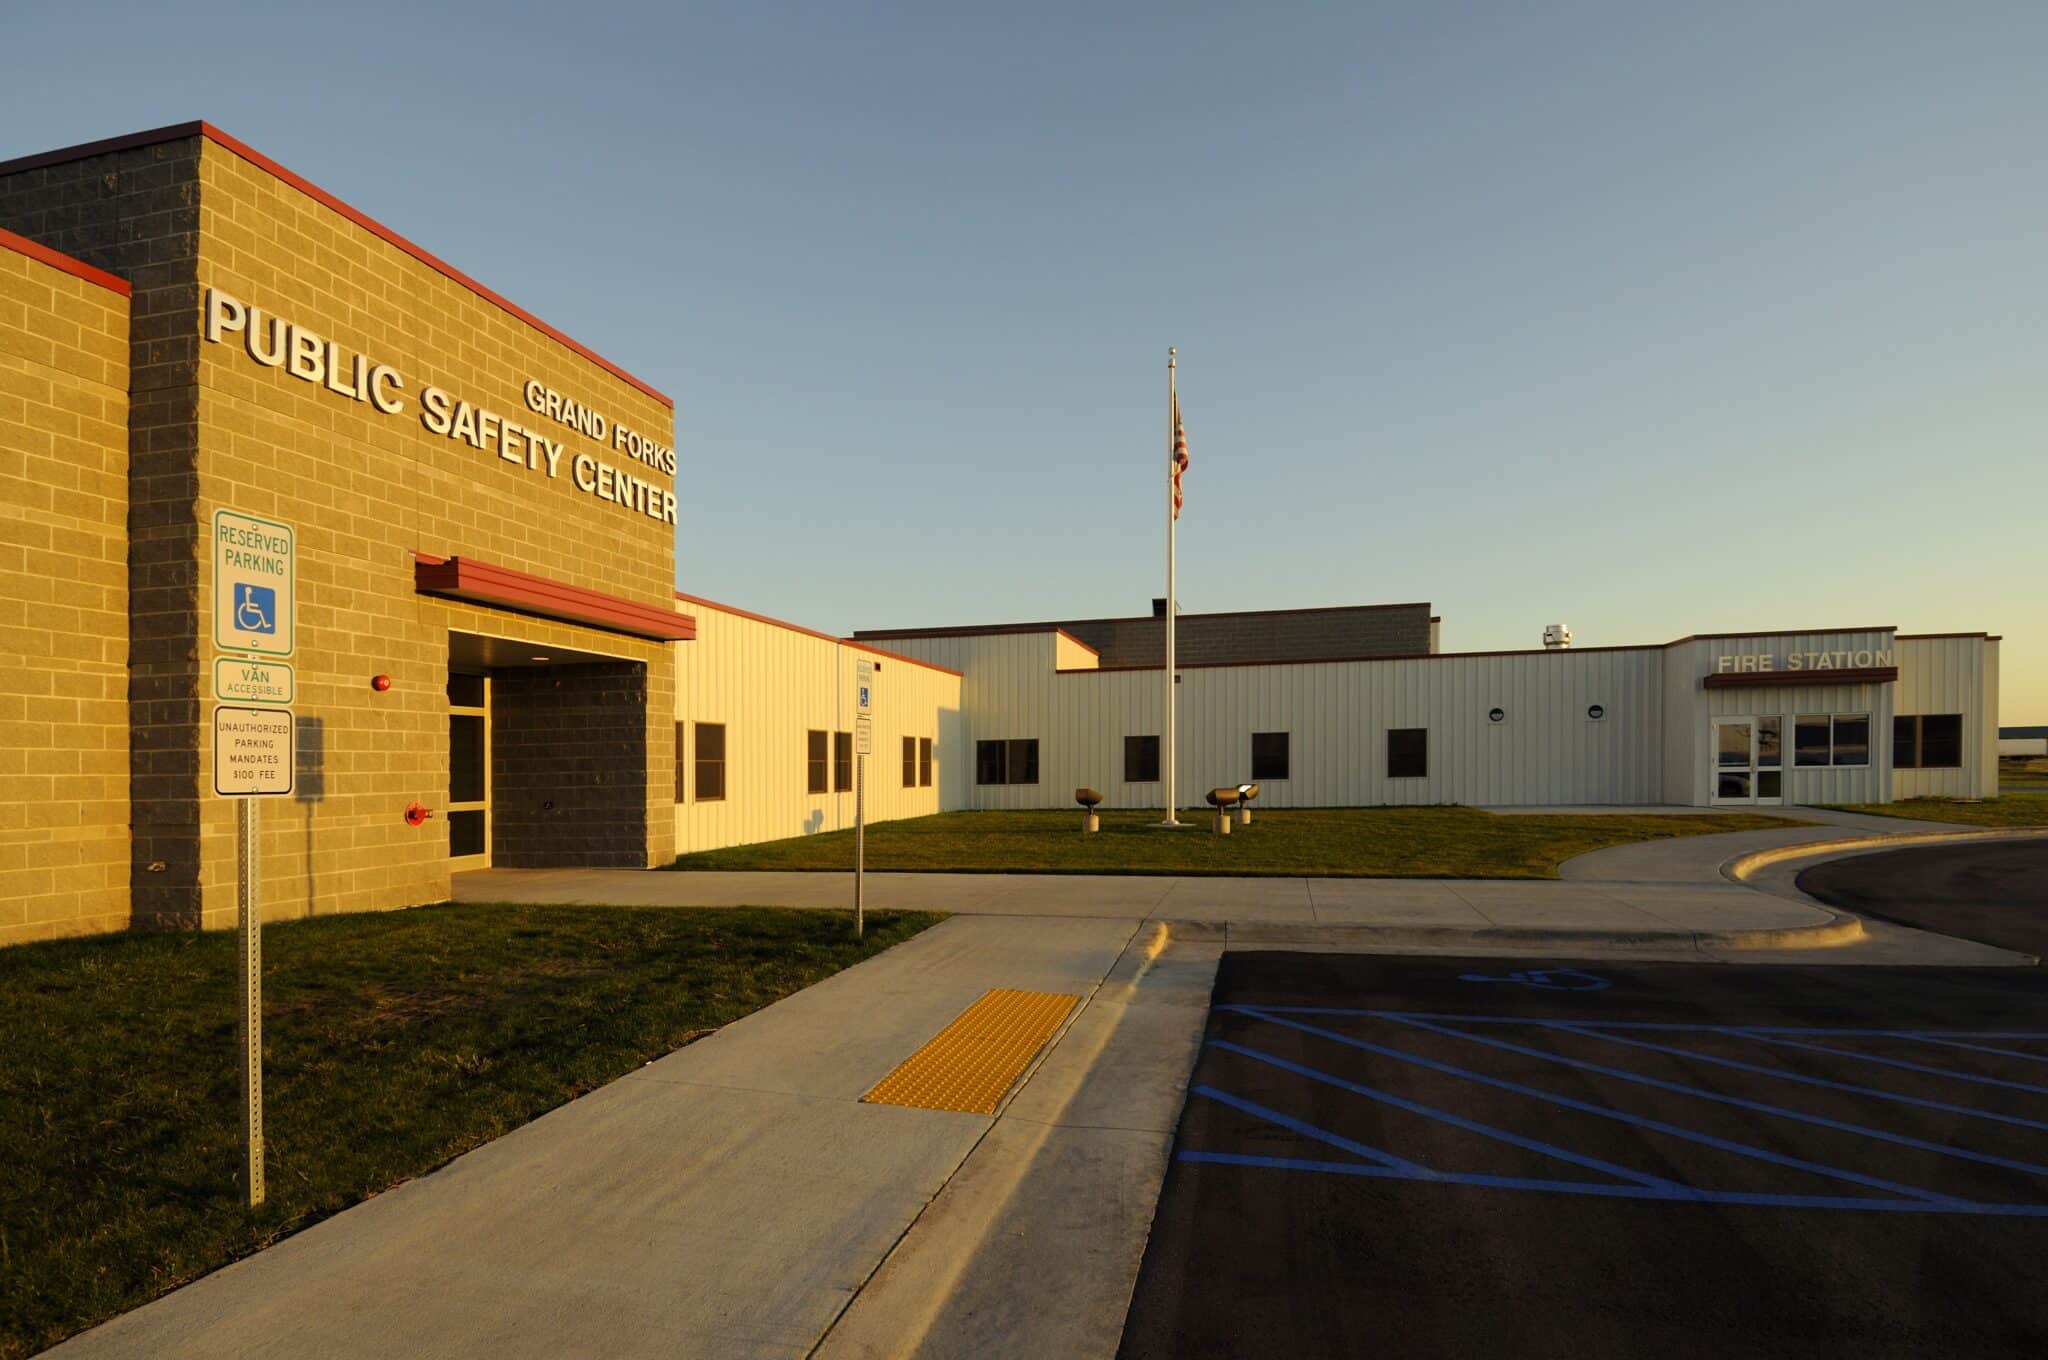 Grand Forks Public Safety Center